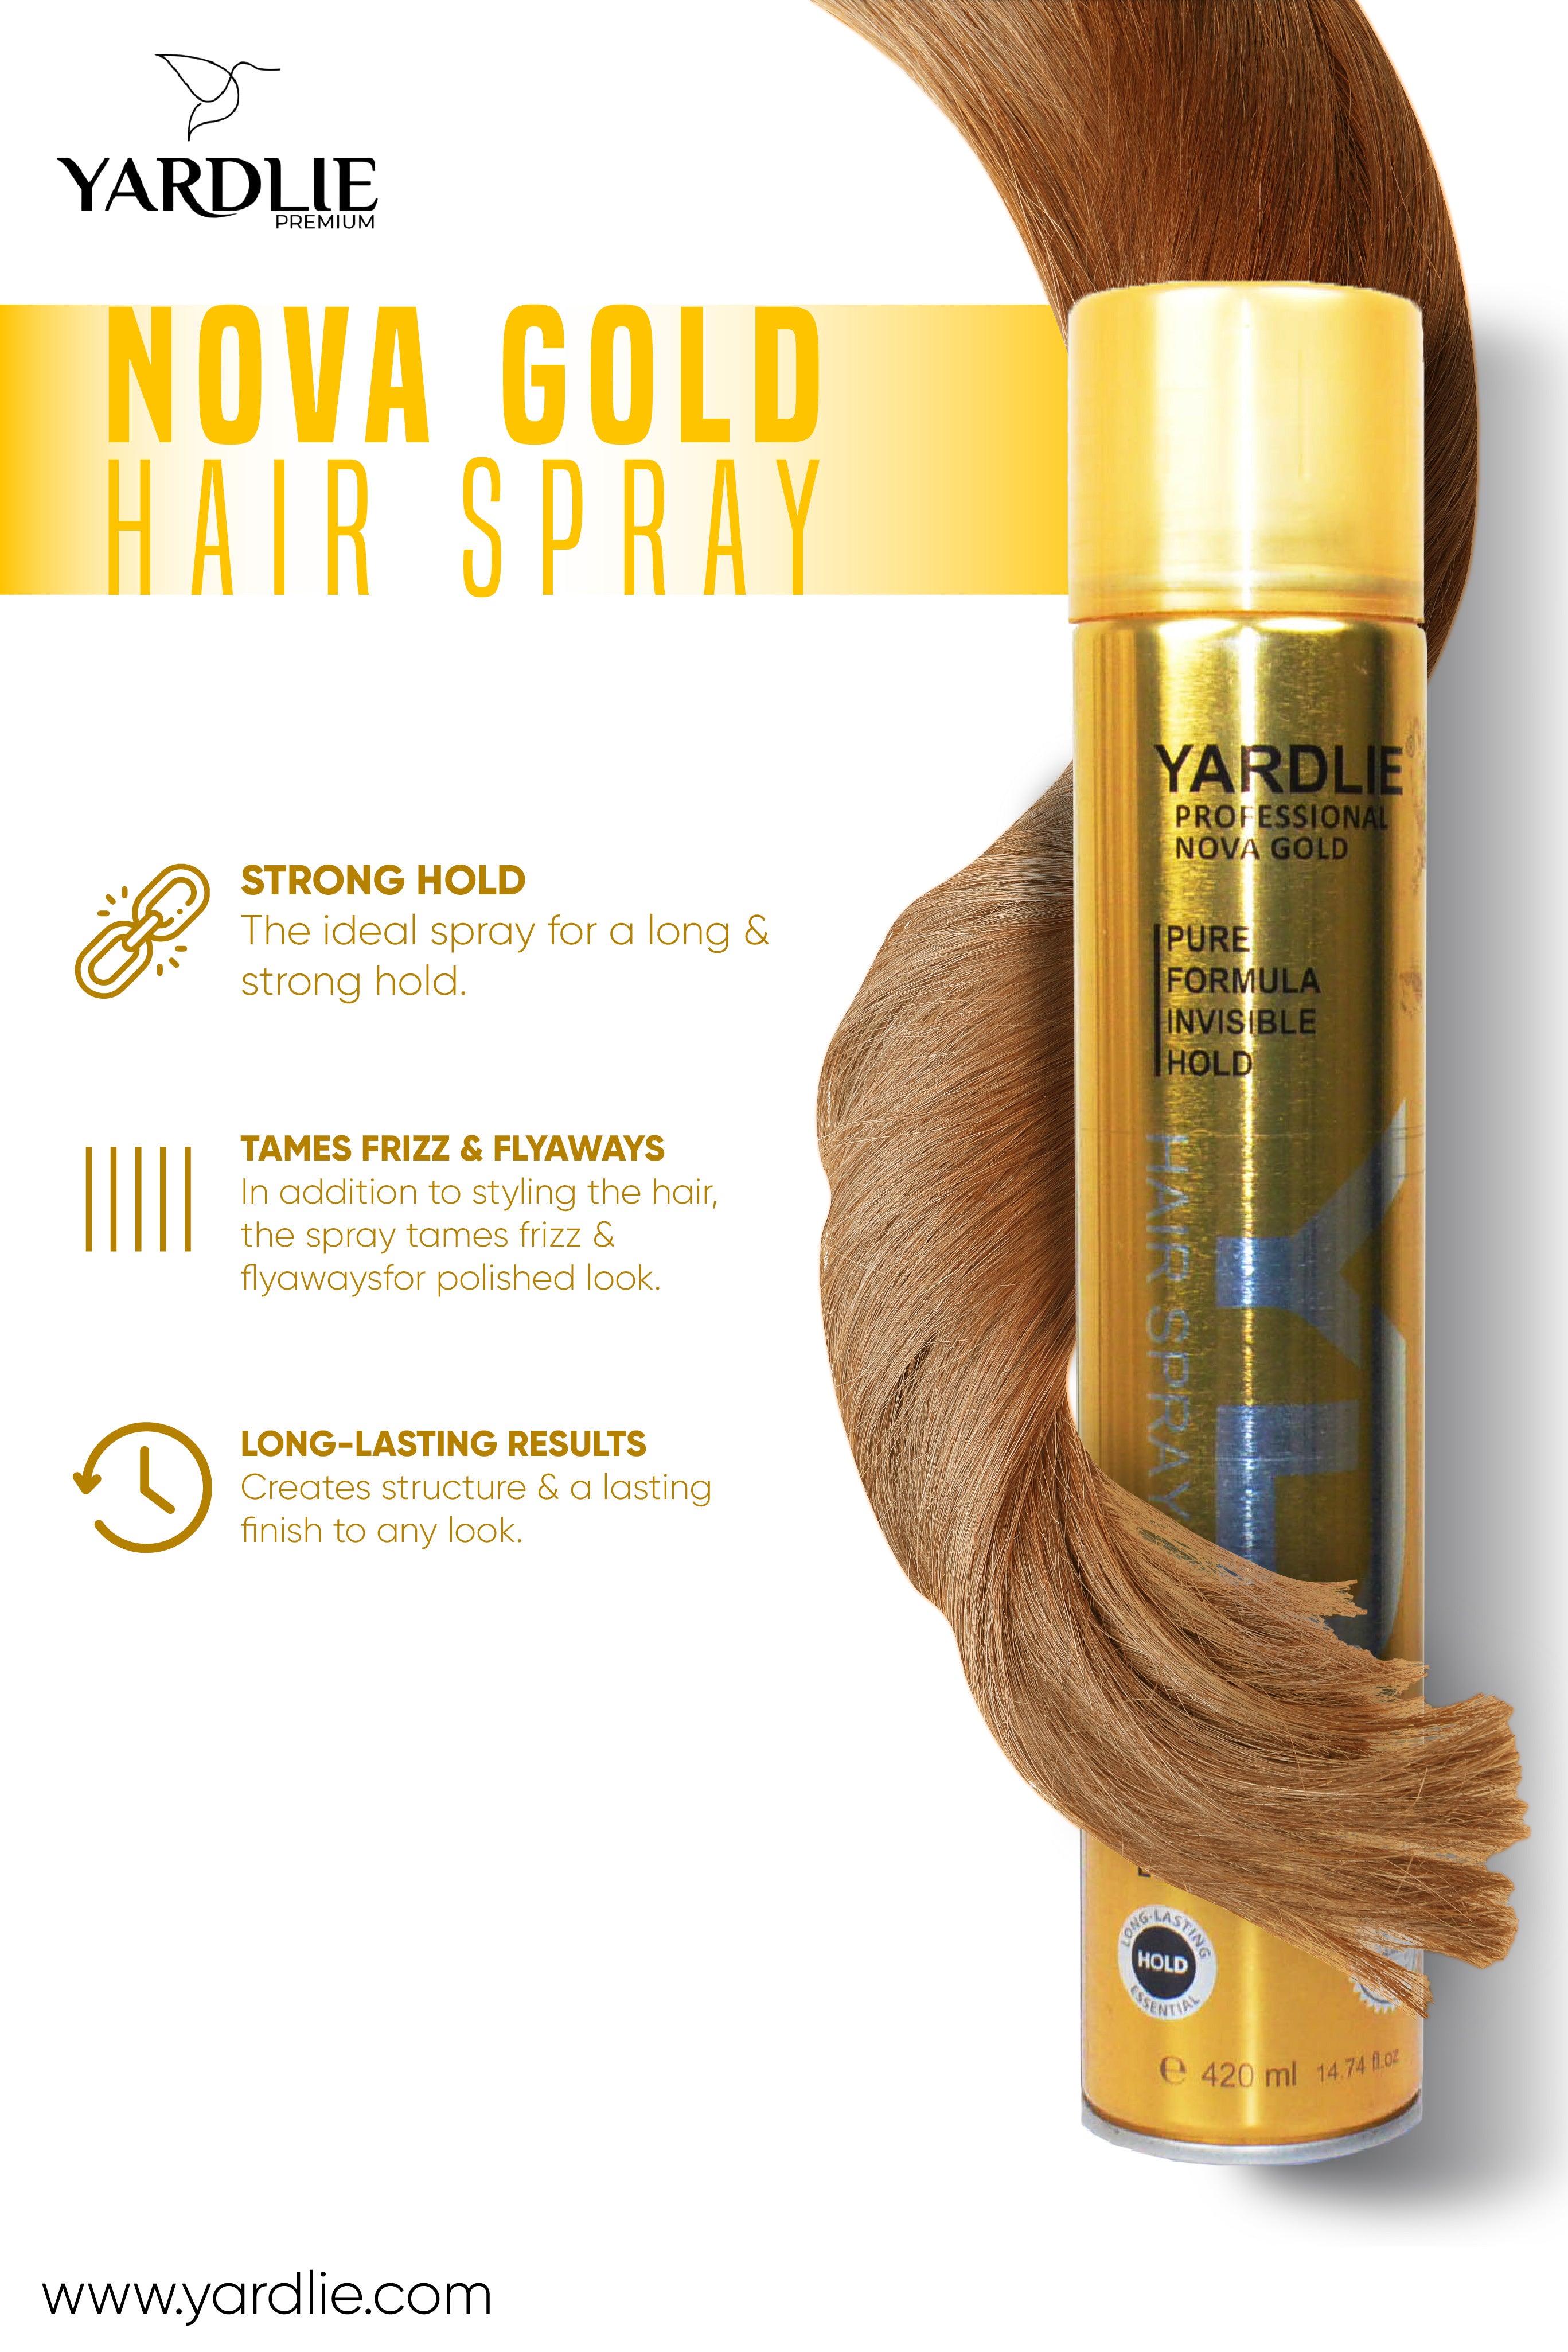 The Glam Life  Nova gold hair spray hair hold spray 320ml Price200   Facebook